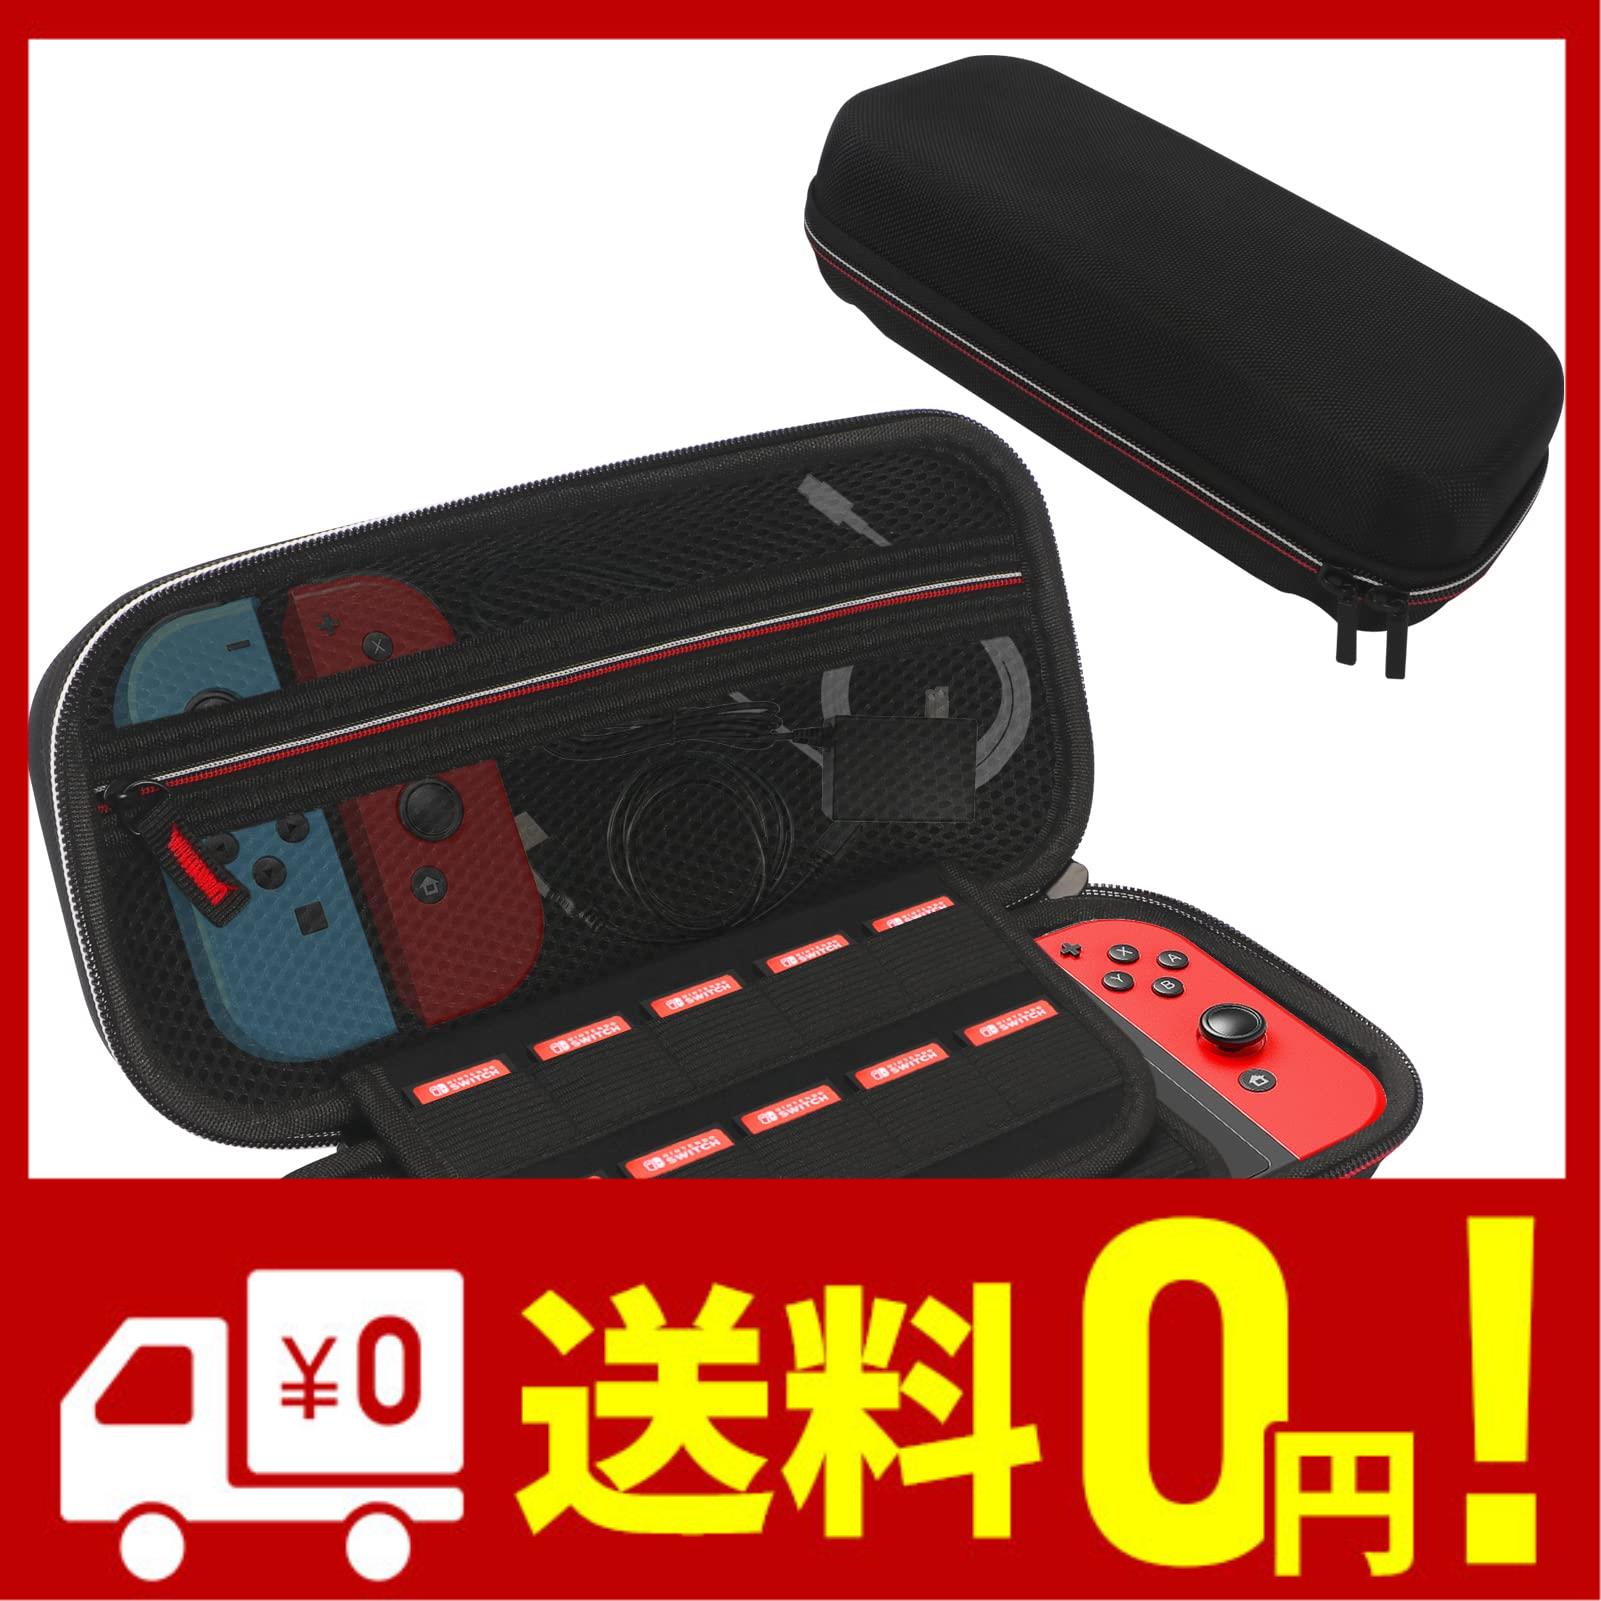 Nintendo Switch対応 Switchケース スイッチケース 大容量 Switchカバー 収納バッグ 防塵 防汚 耐衝撃 スイッチ保護カバー 持ち運び便利